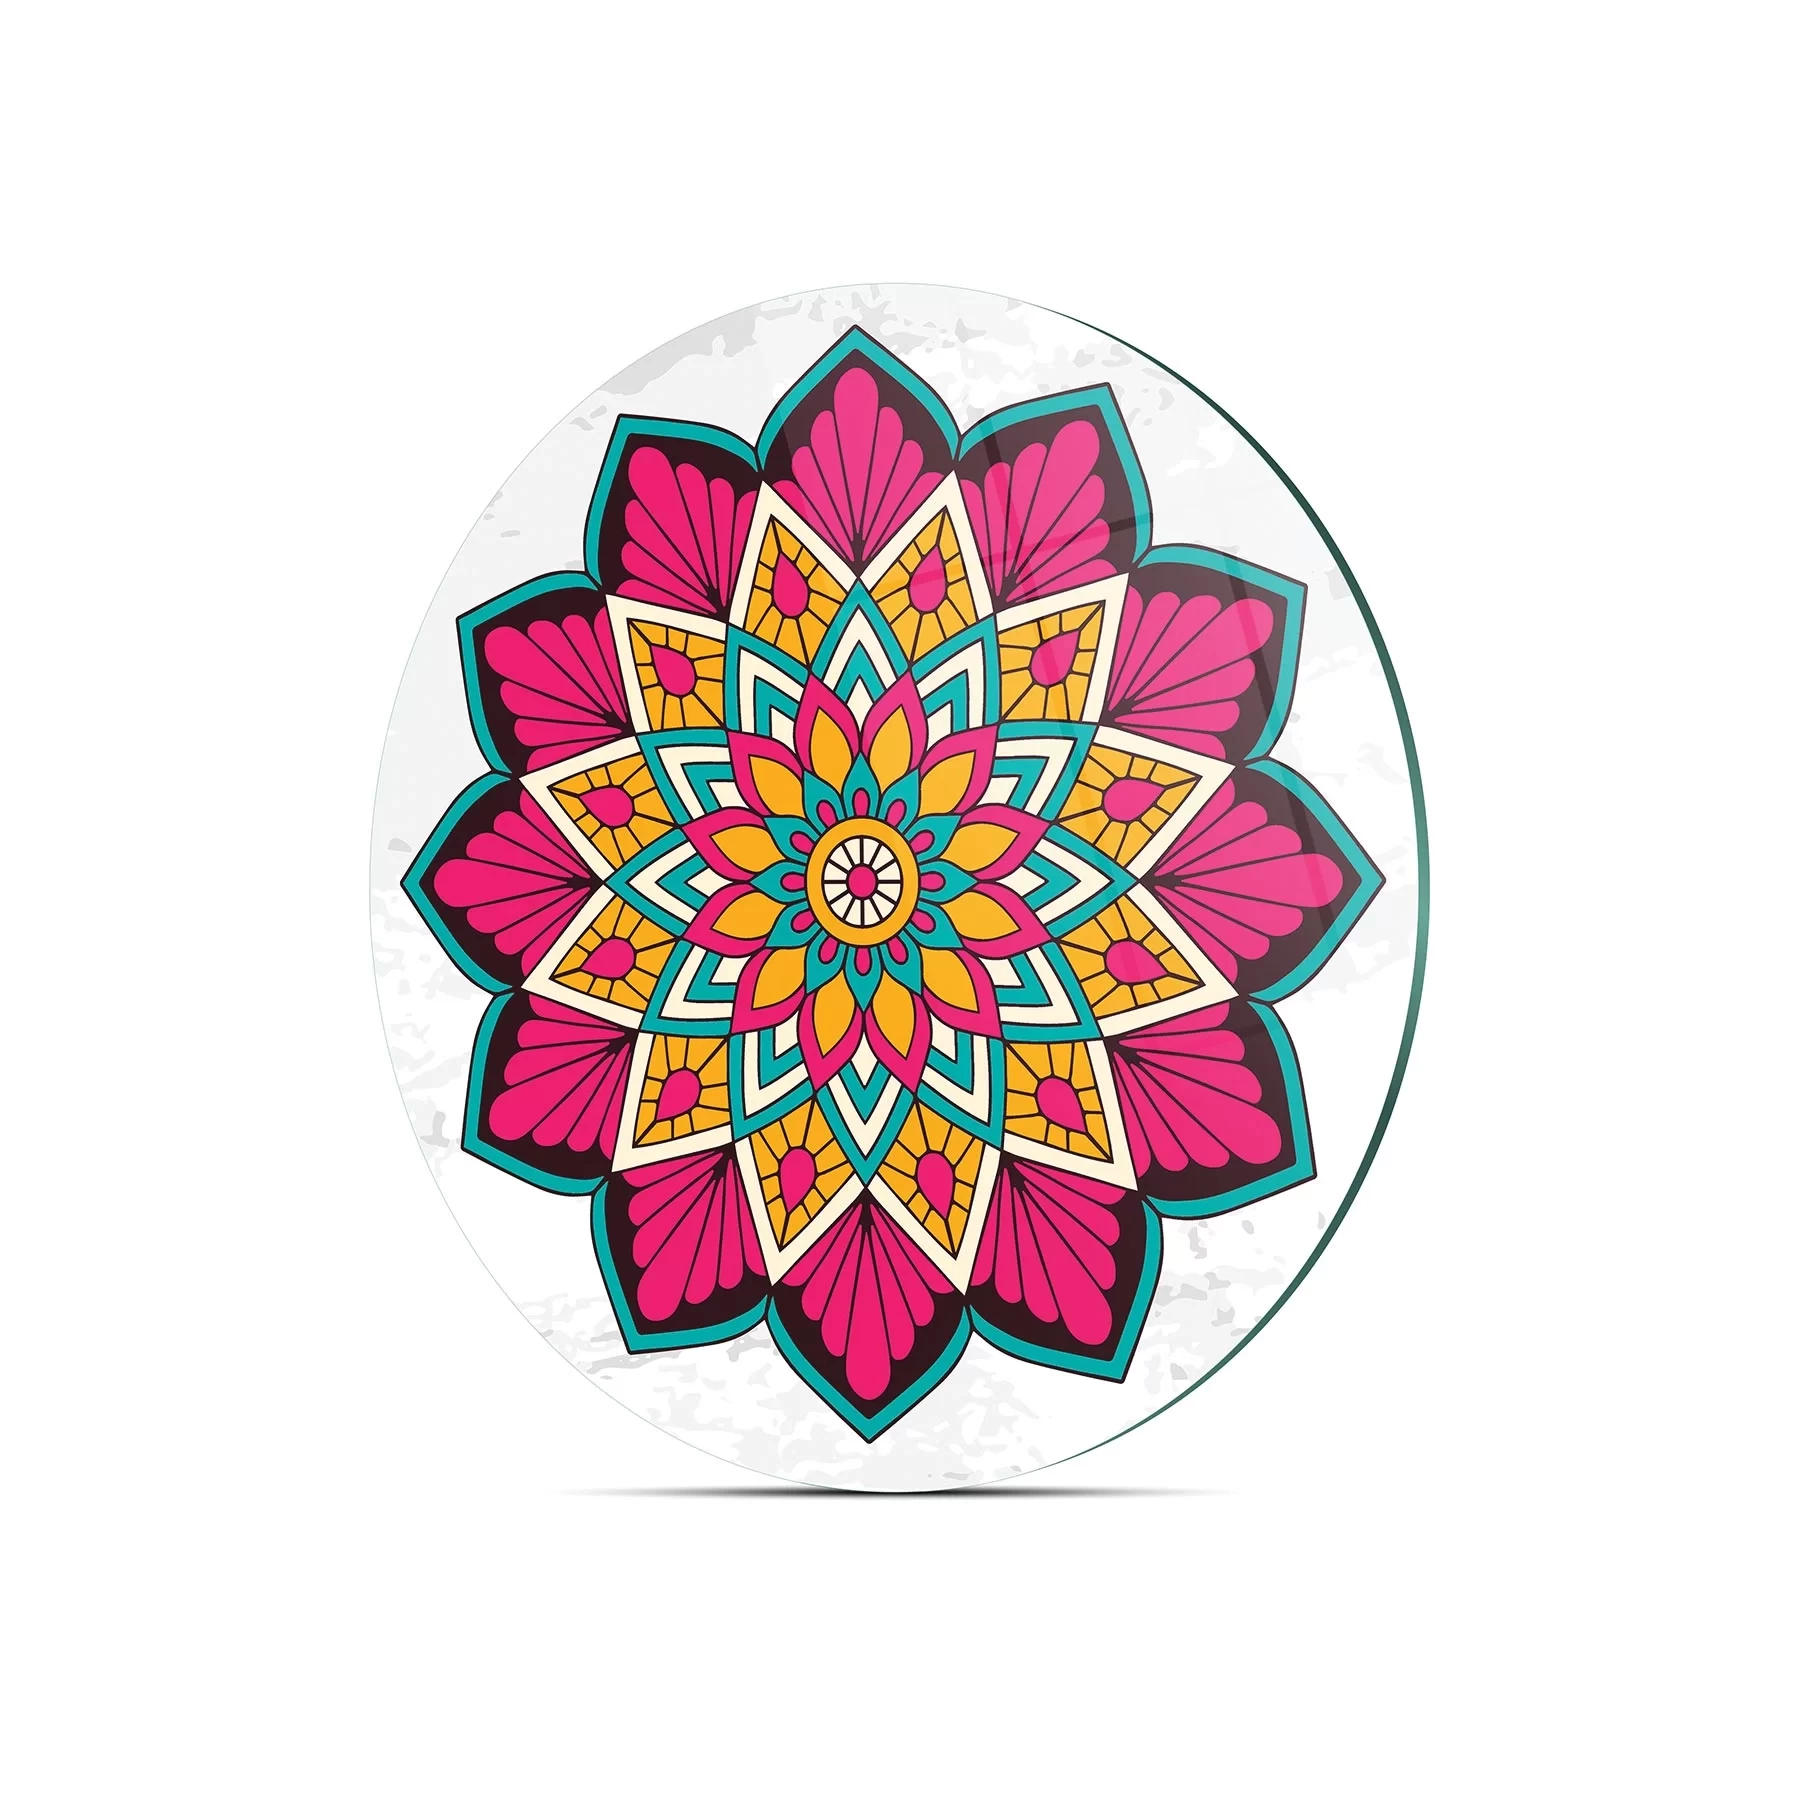 Decovetro Cam Kesme Tahtası Yuvarlak Mandala Desenli 30x30 Cm